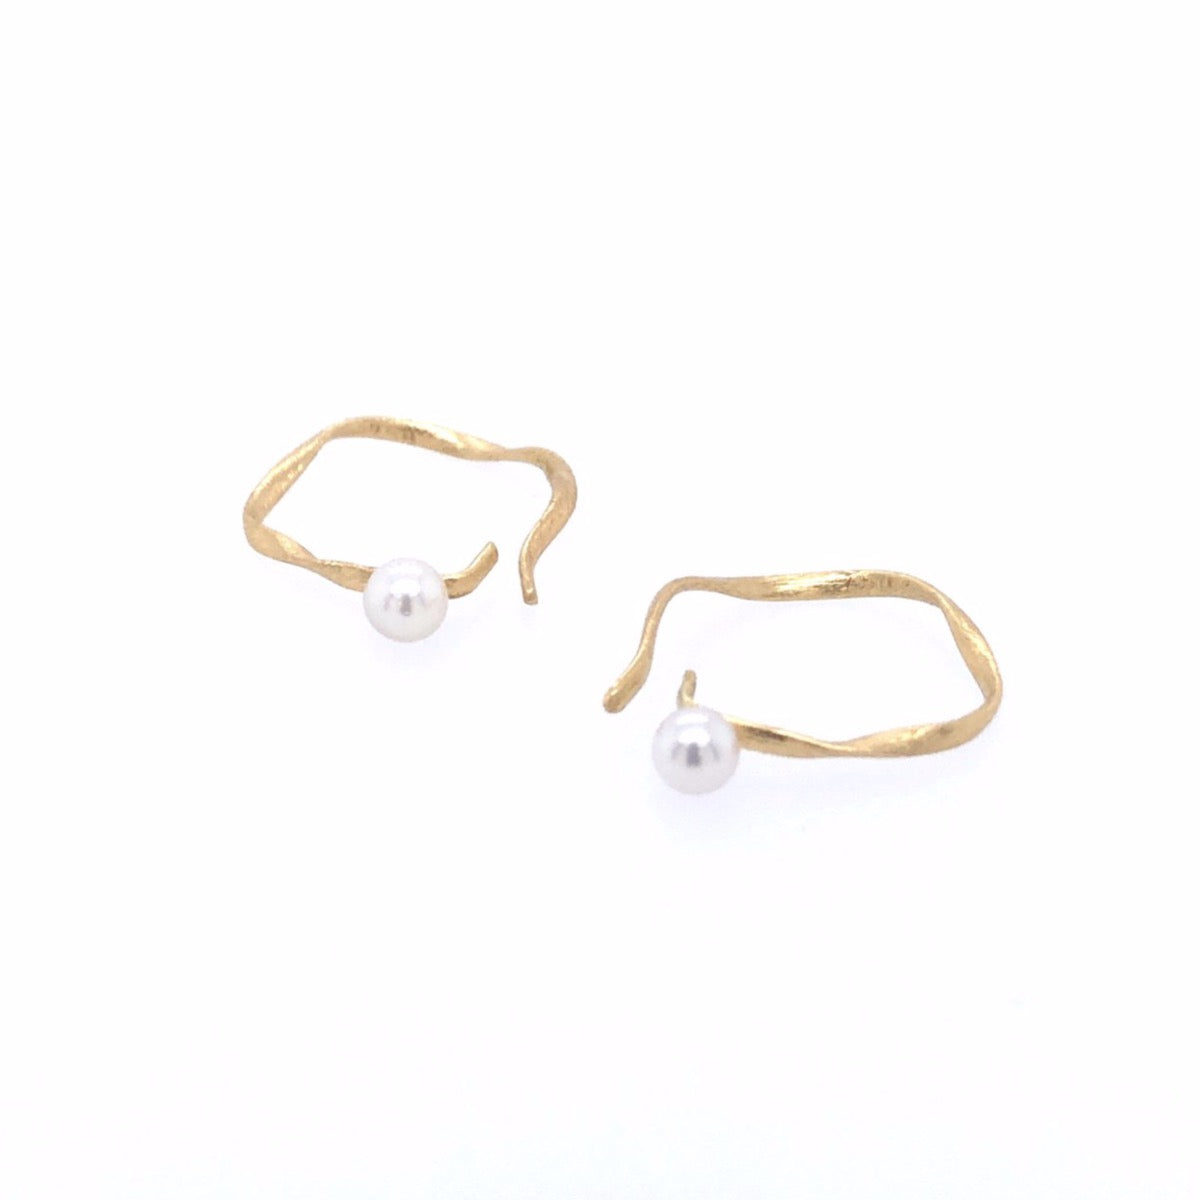 Flair earrings "Little Hoop" 18 kt. Gold and Akoya pearls